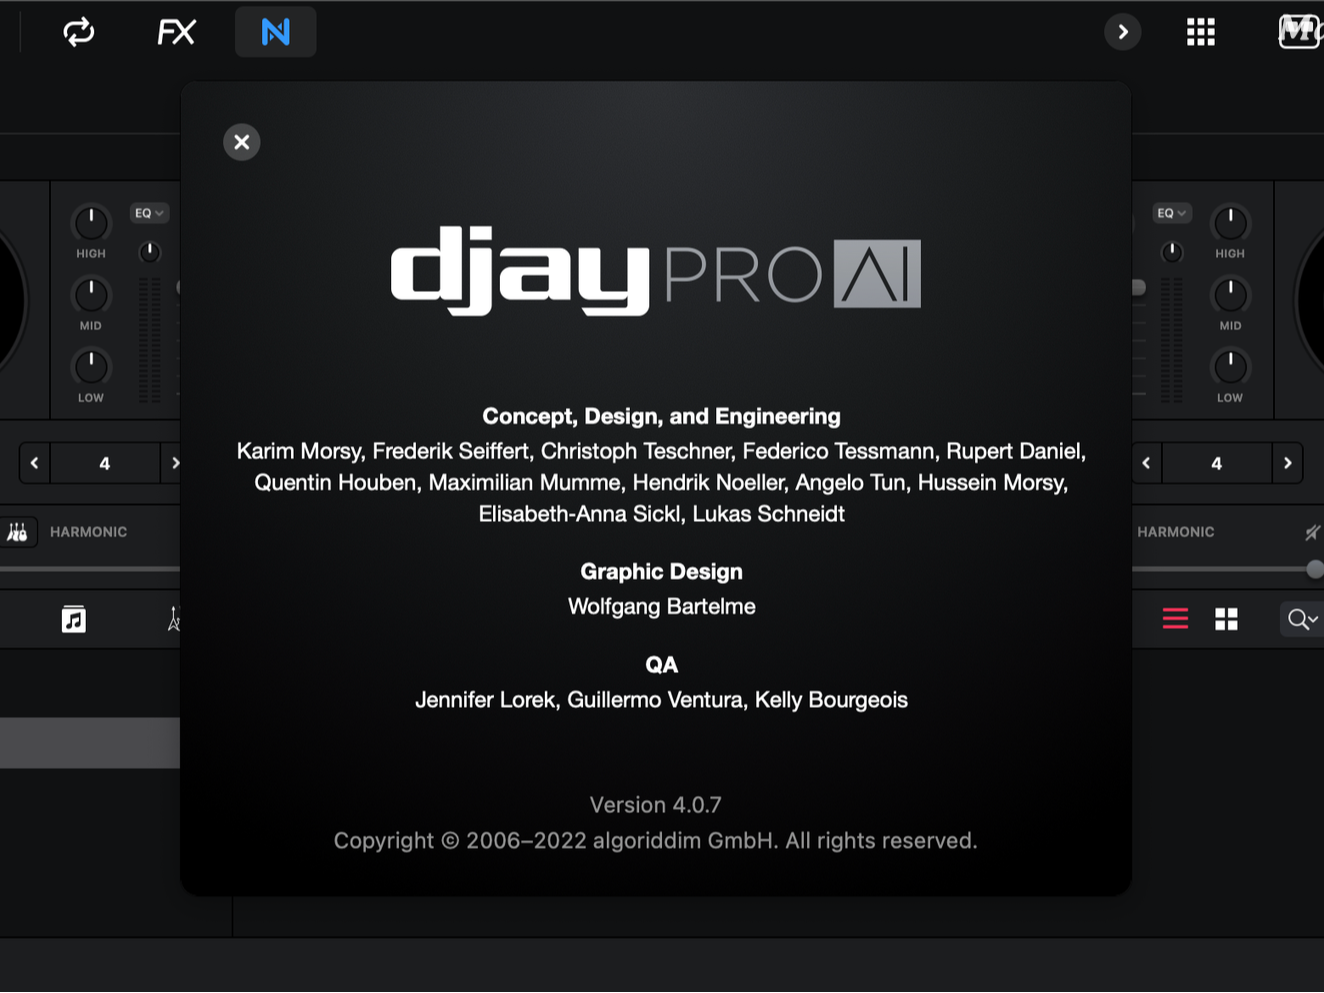 djay Pro AI for mac download free